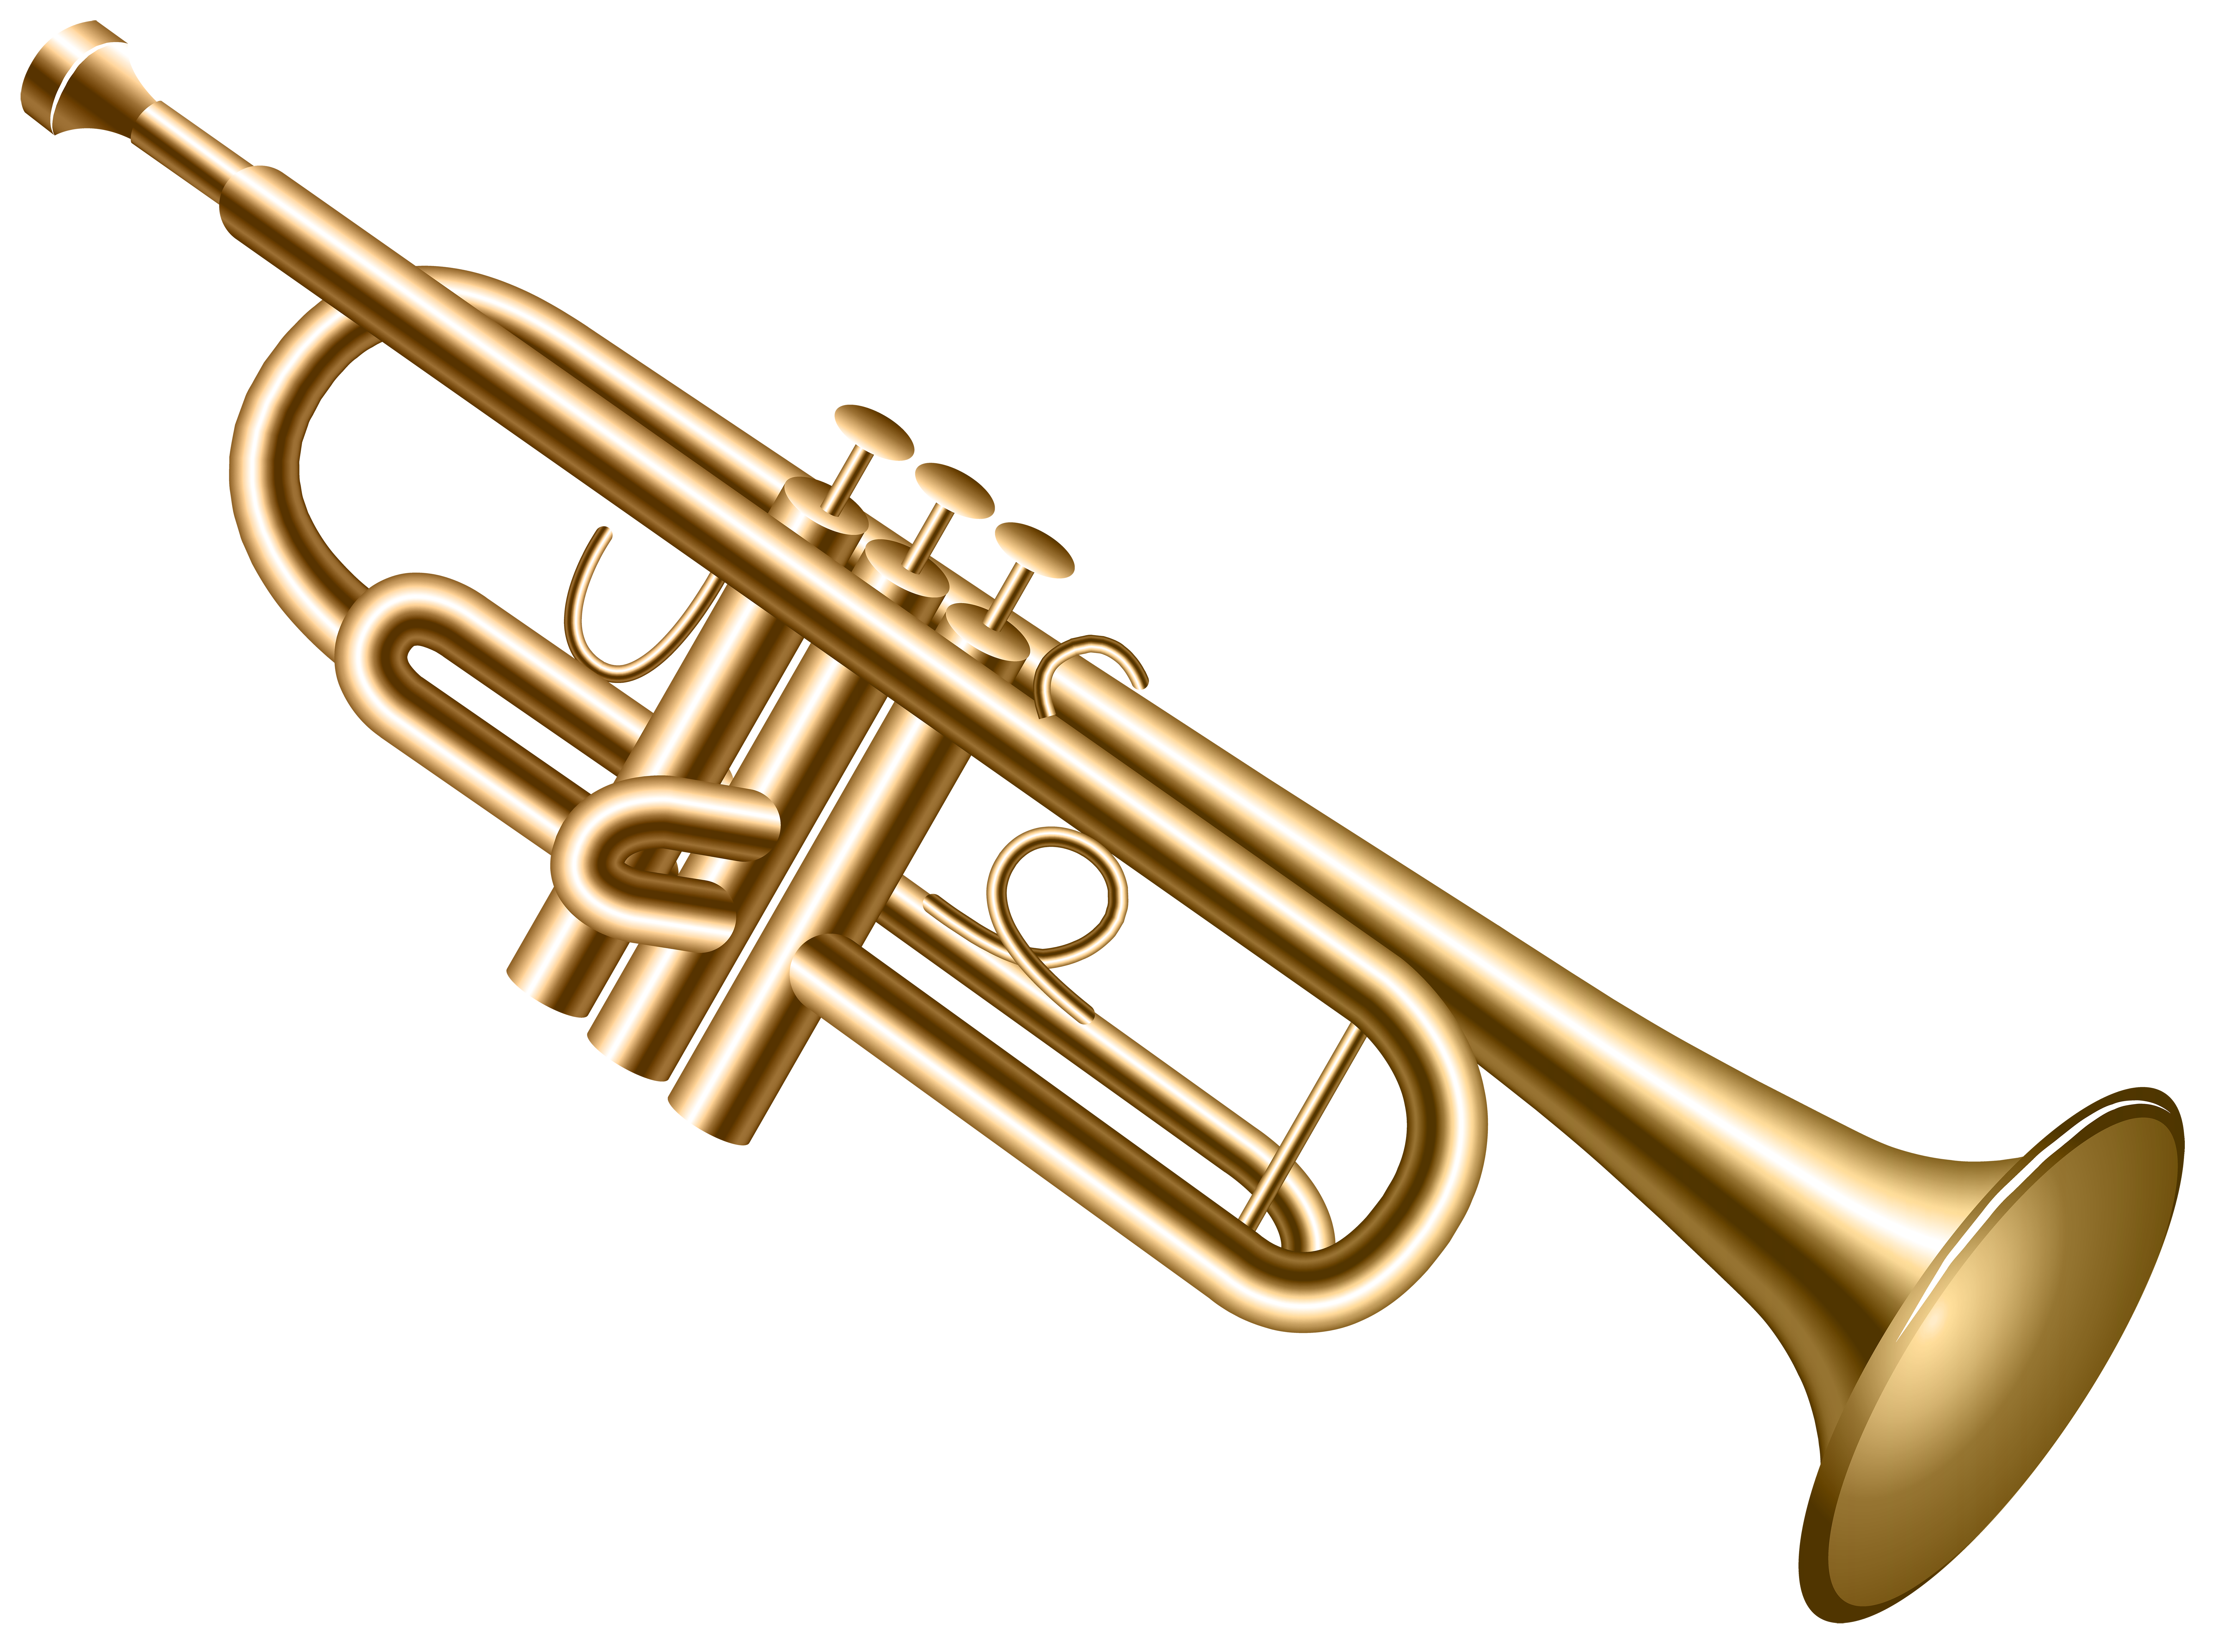 instruments clipart trumpet